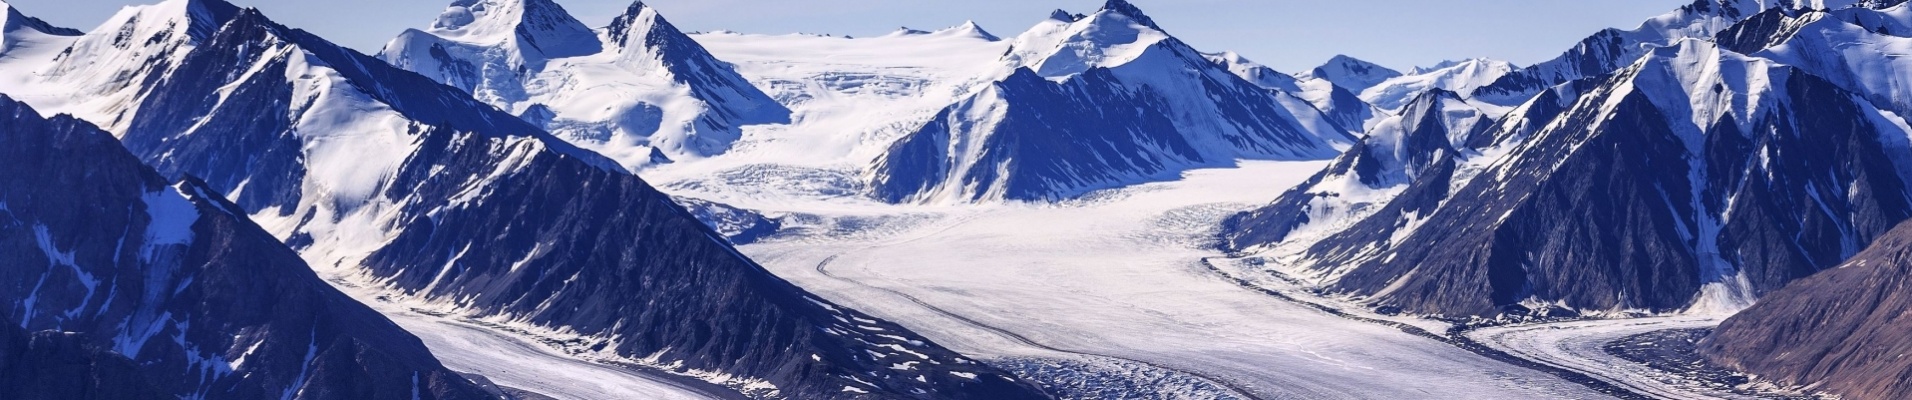 glaciers-kluane-national-park-yukon-canada